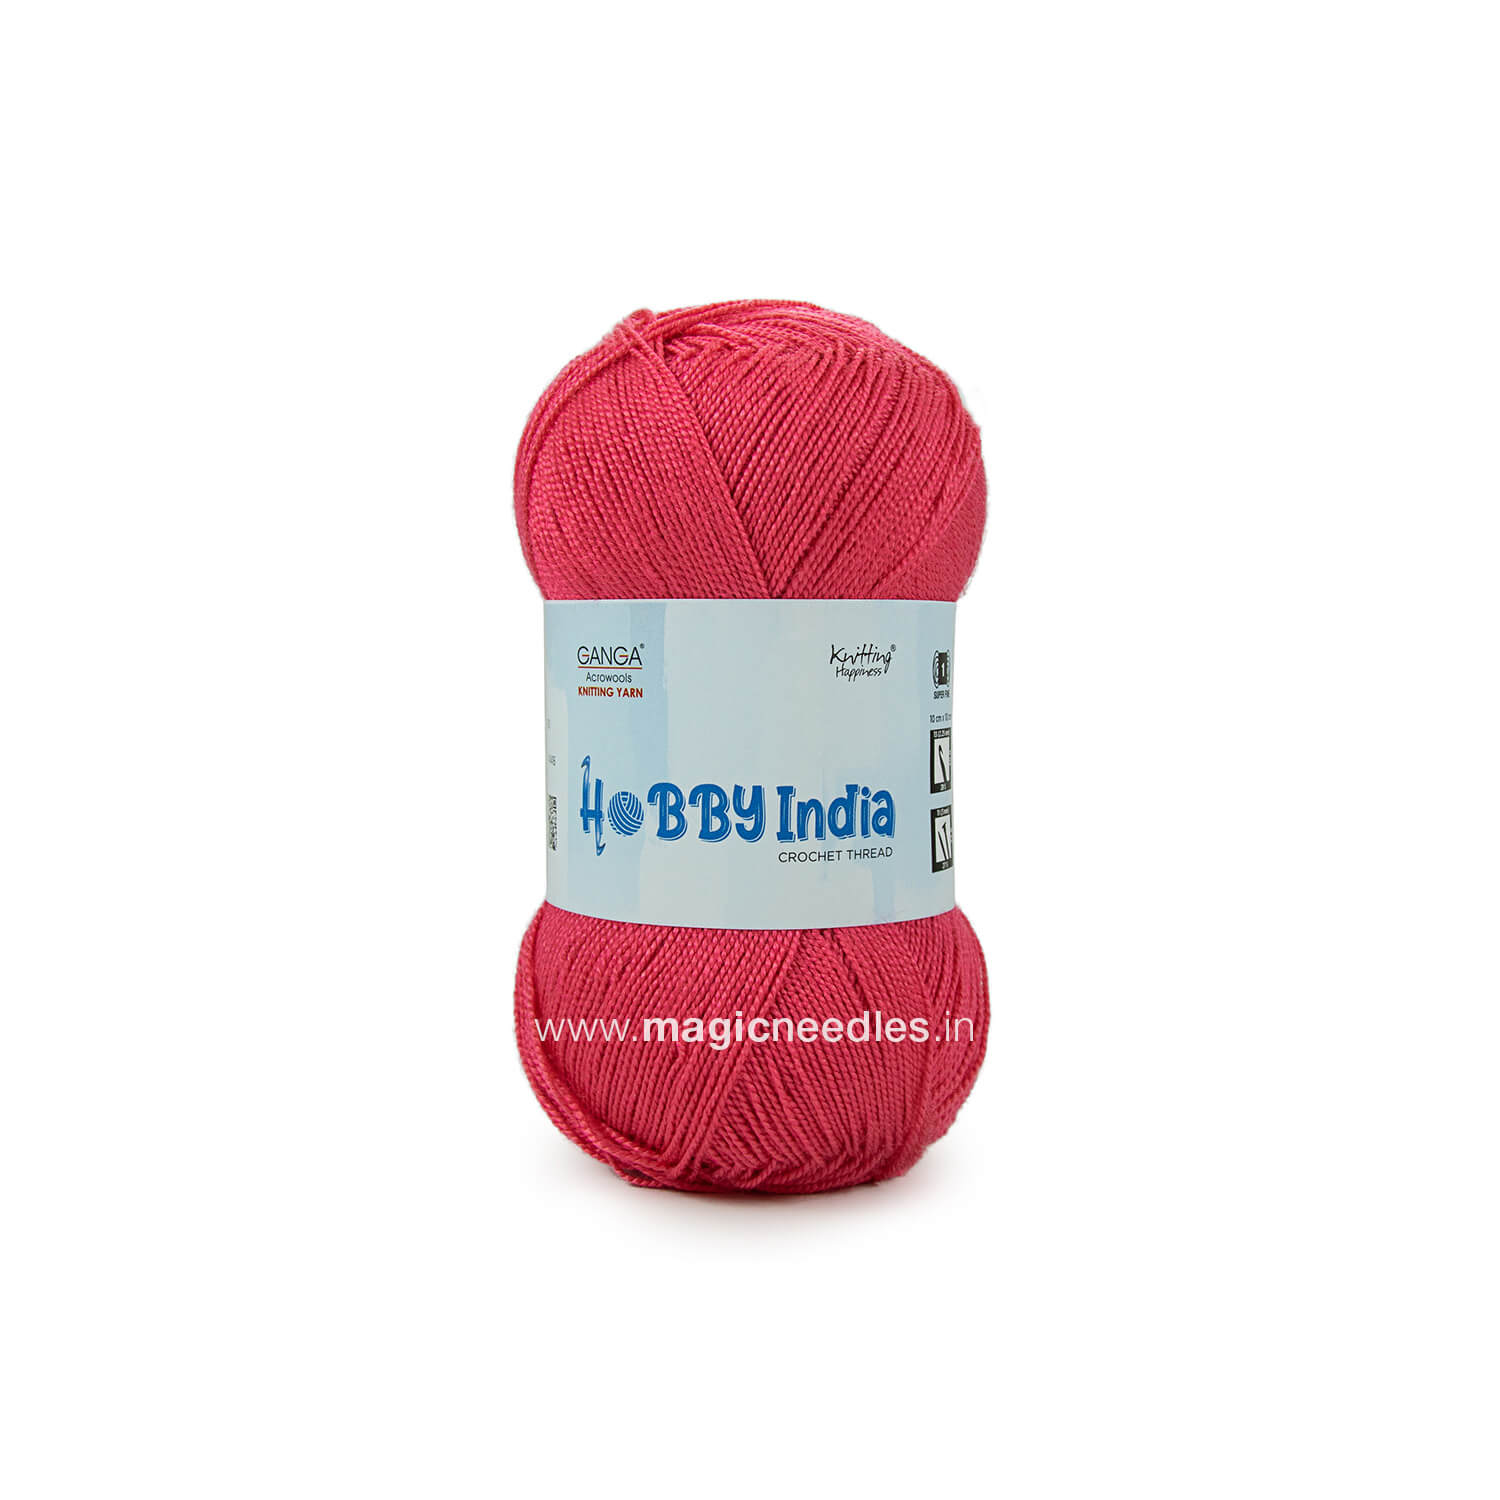 Ganga Hobby India Crochet Thread - Pink 20